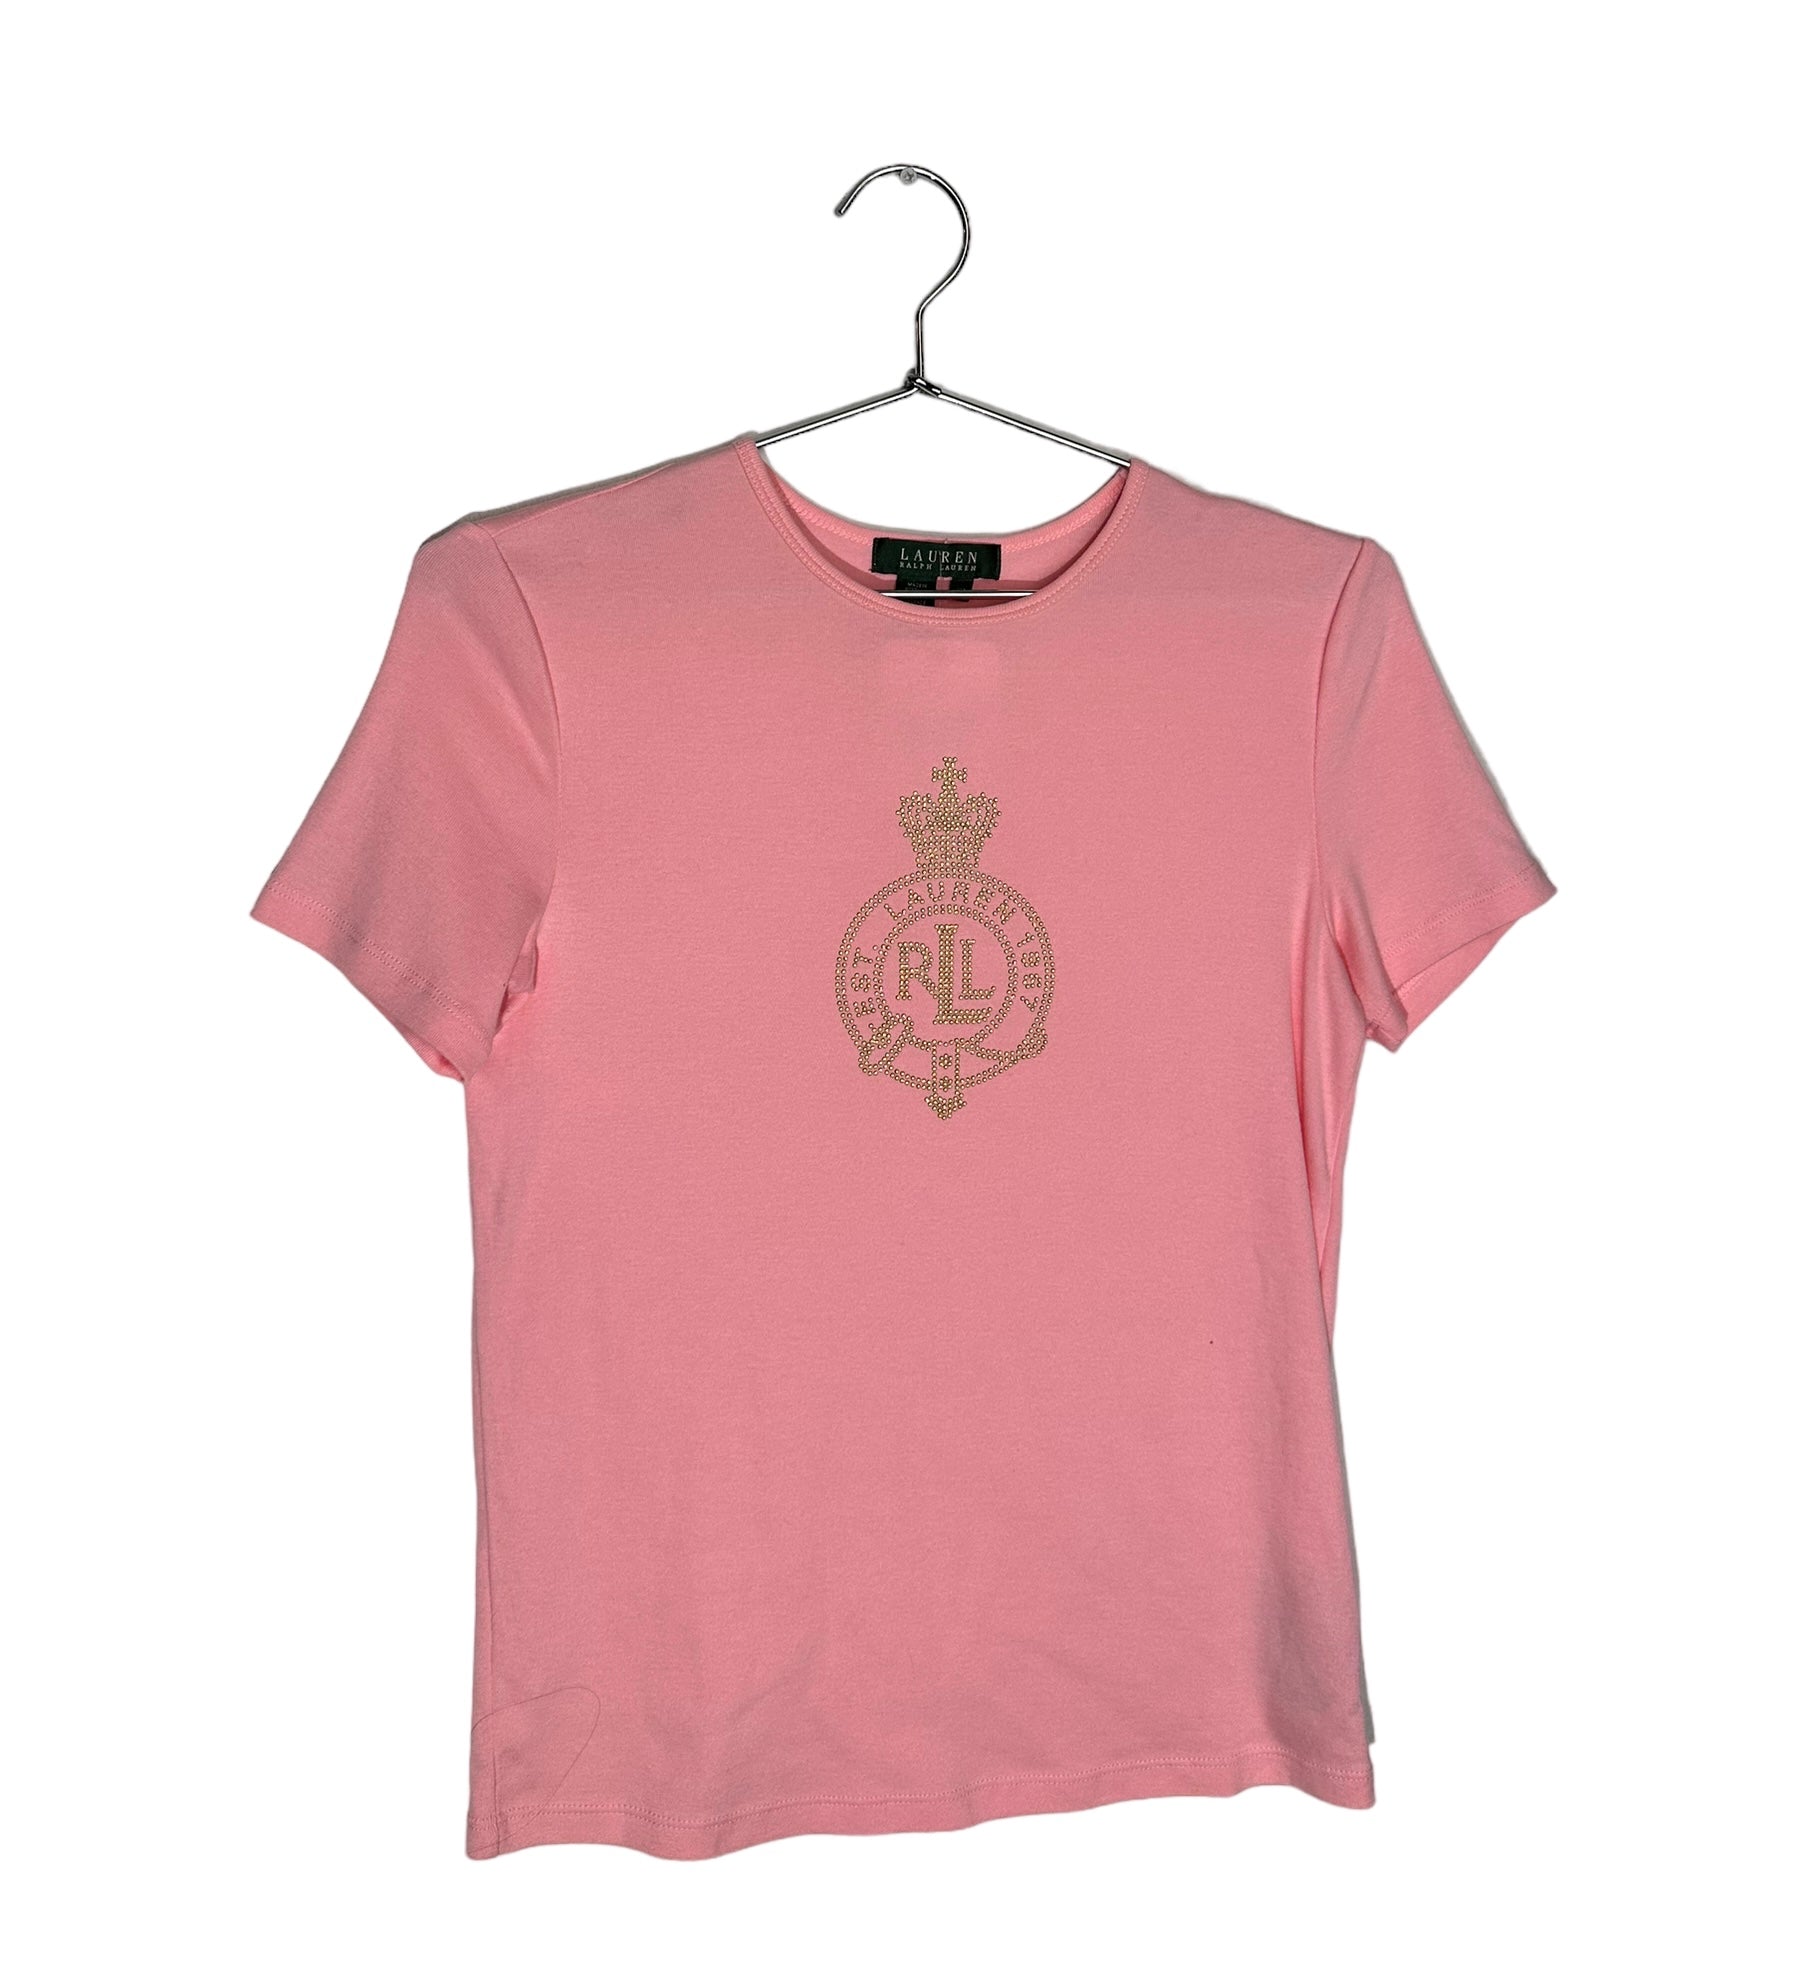 Pink Ralph Lauren Top With Gold Bedazzled Emblem